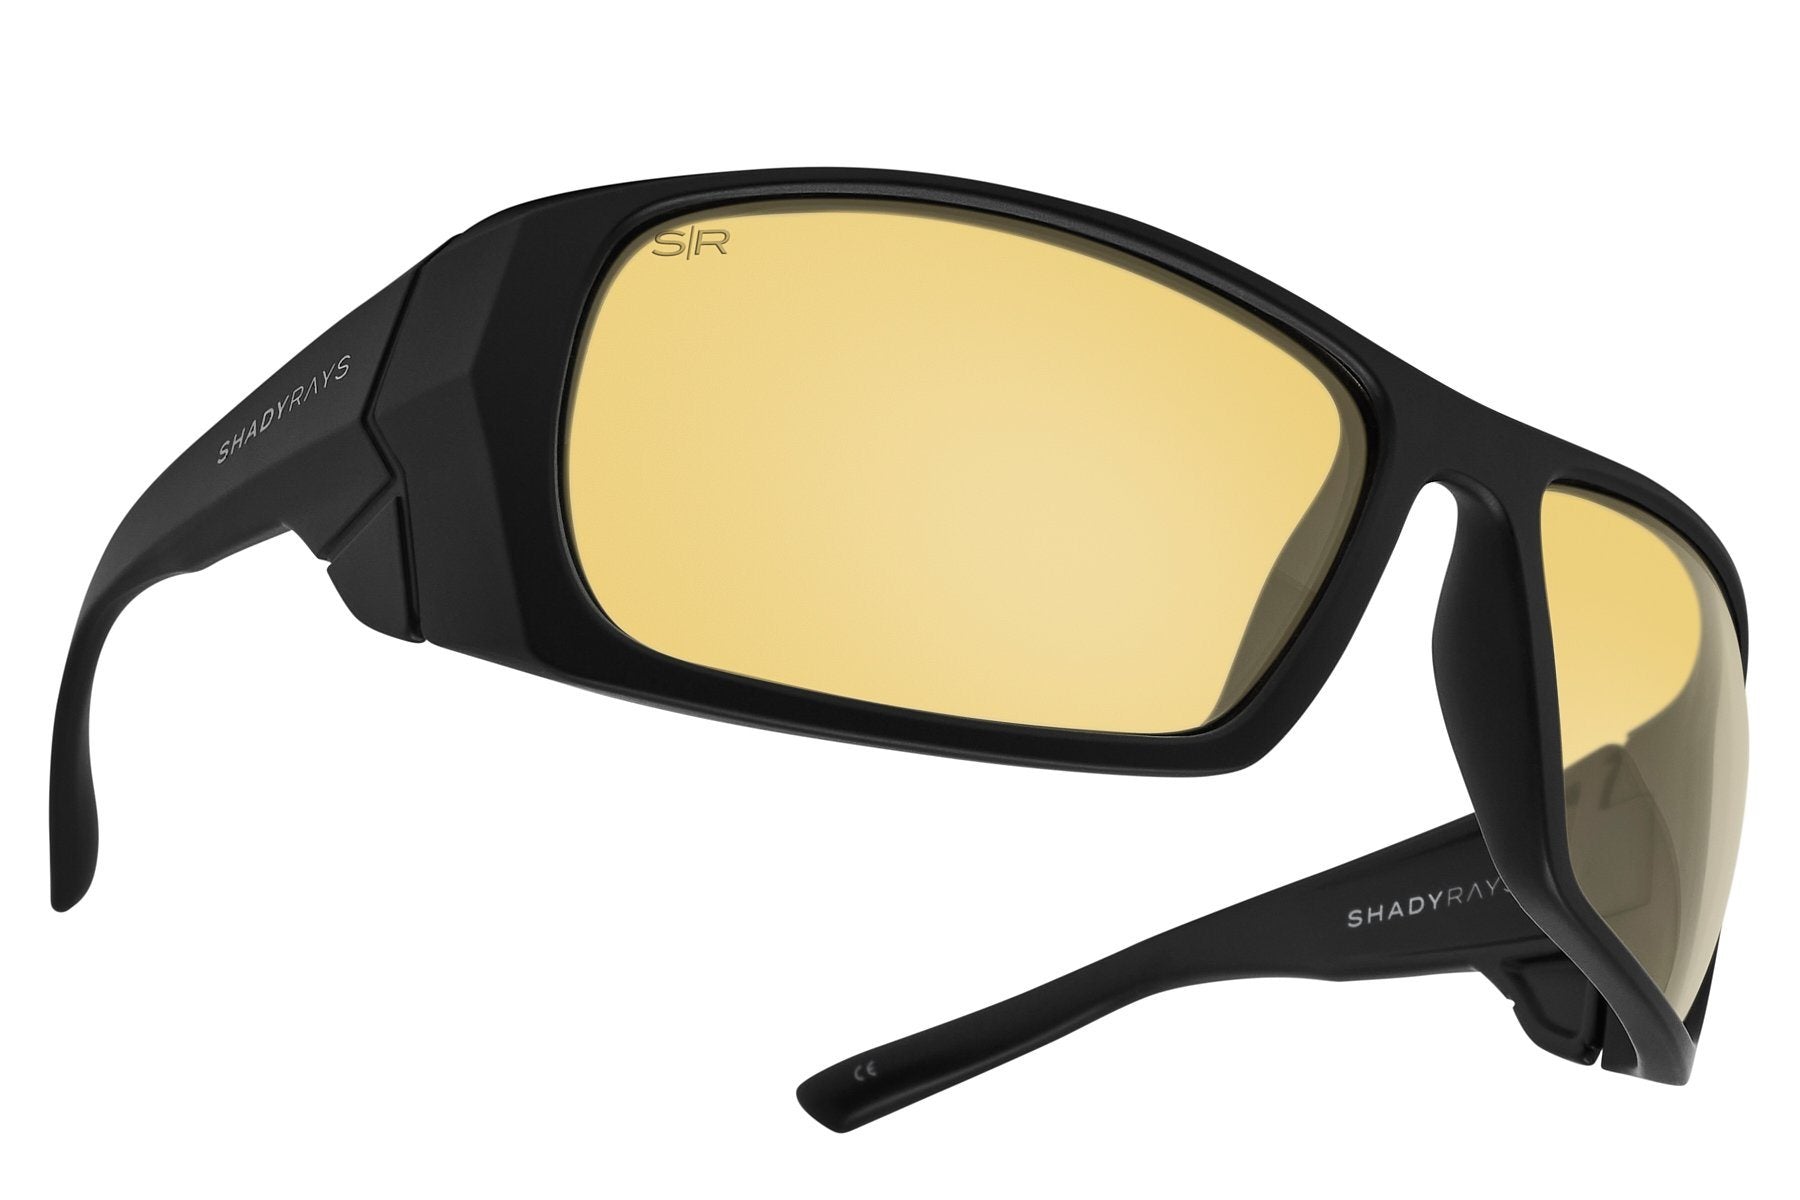 TERAISE Night Vision Glasses Safety Driving Polarized Retro Sunglasses  Anti-Glare HD Yellow Lens for Men & Women